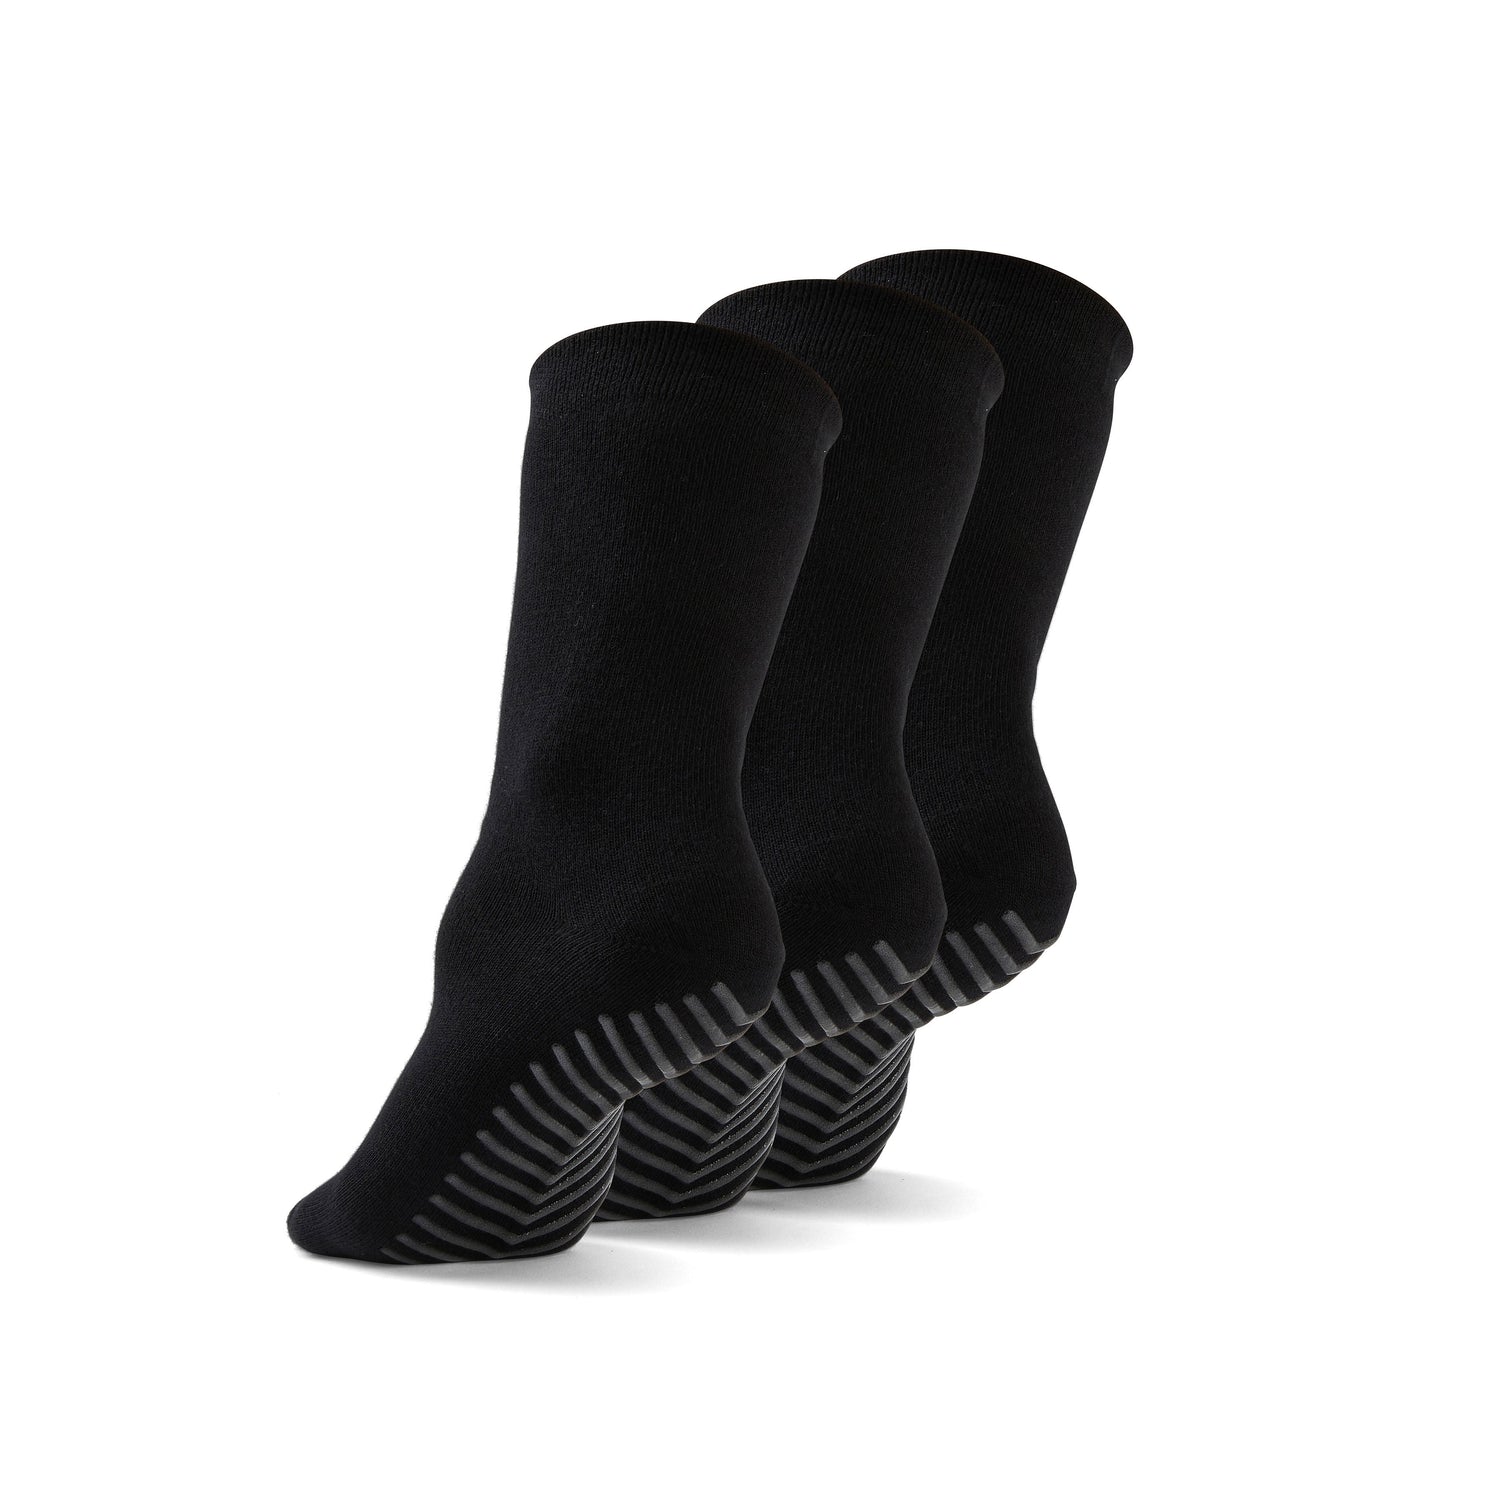 Black anti slip socks made of ultra soft cotton that sit just below the calf.